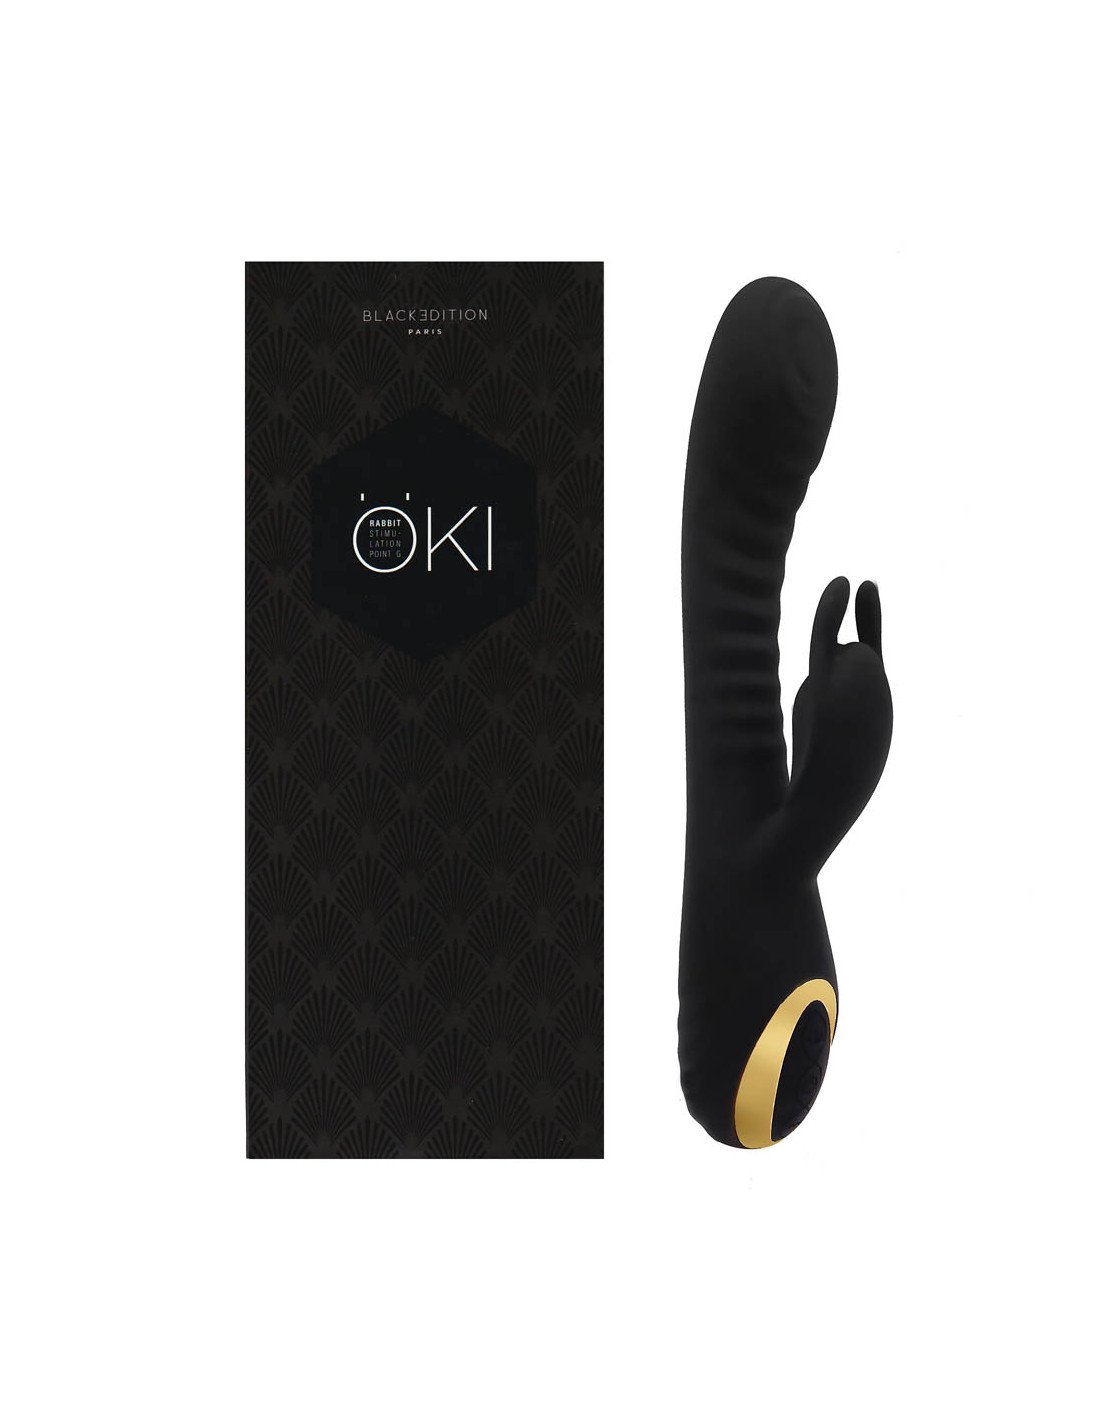 Black Edition Rabbit triple stimulation ÖKI Q5m3aGAw